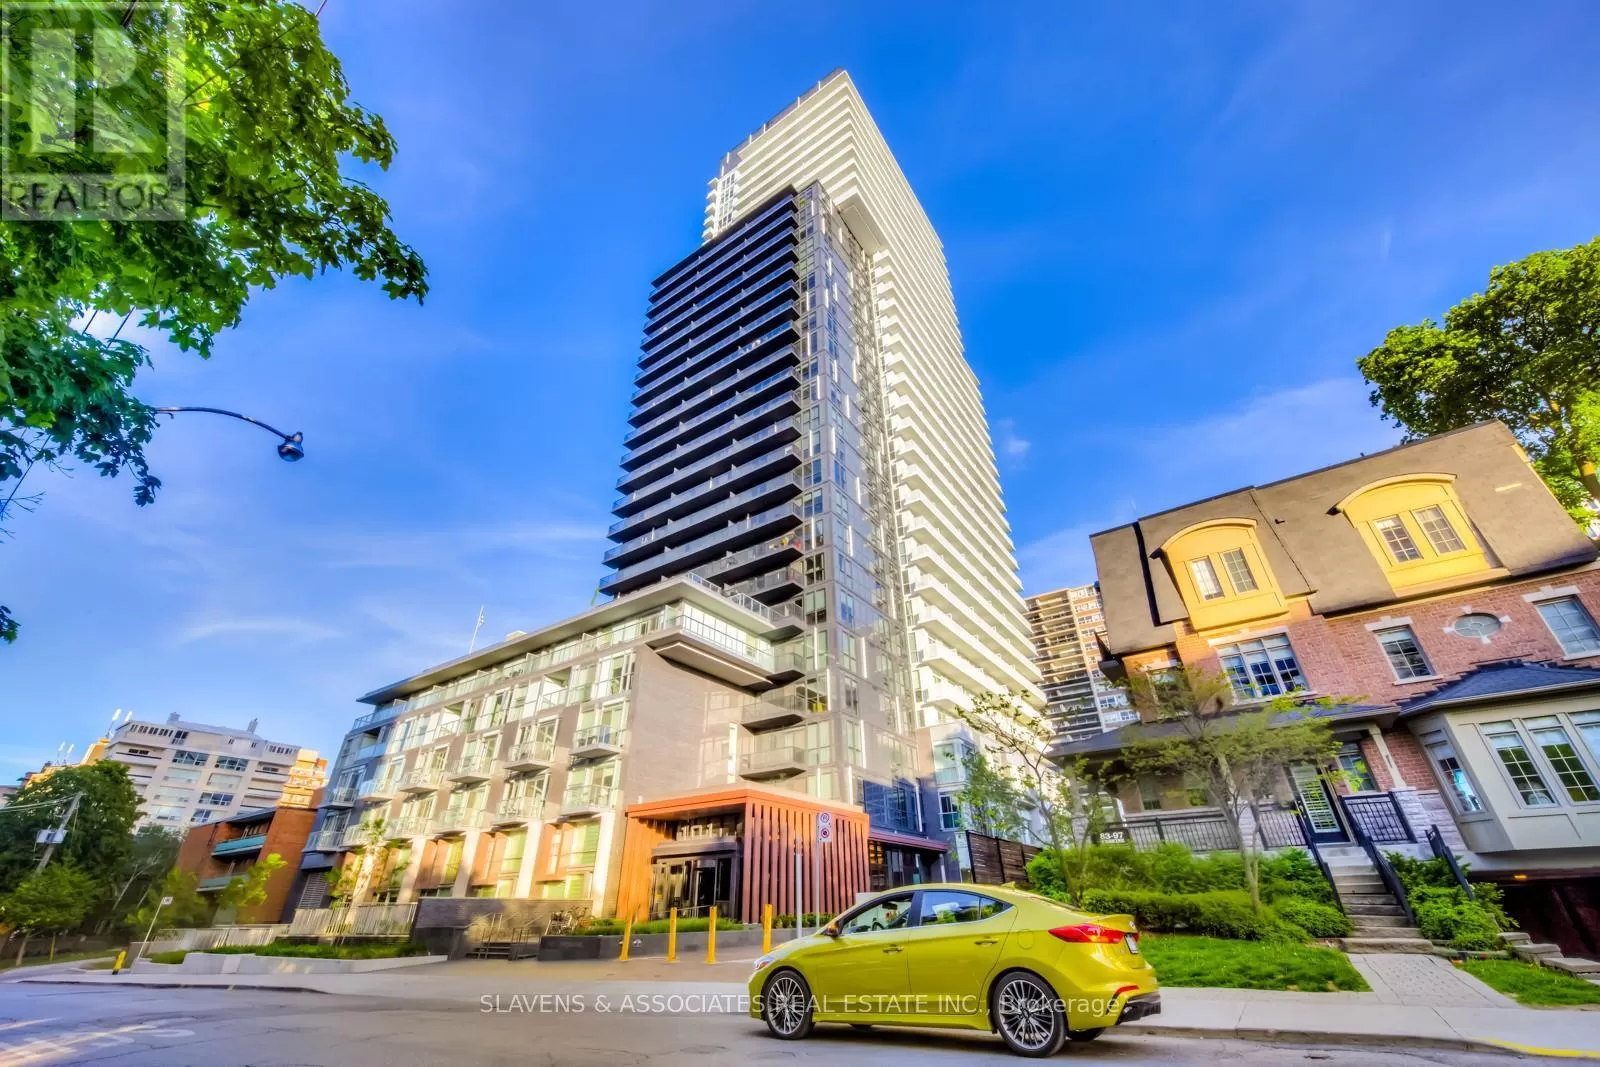 Apartment for rent: 713 - 101 Erskine Avenue, Toronto, Ontario M4P 1Y5